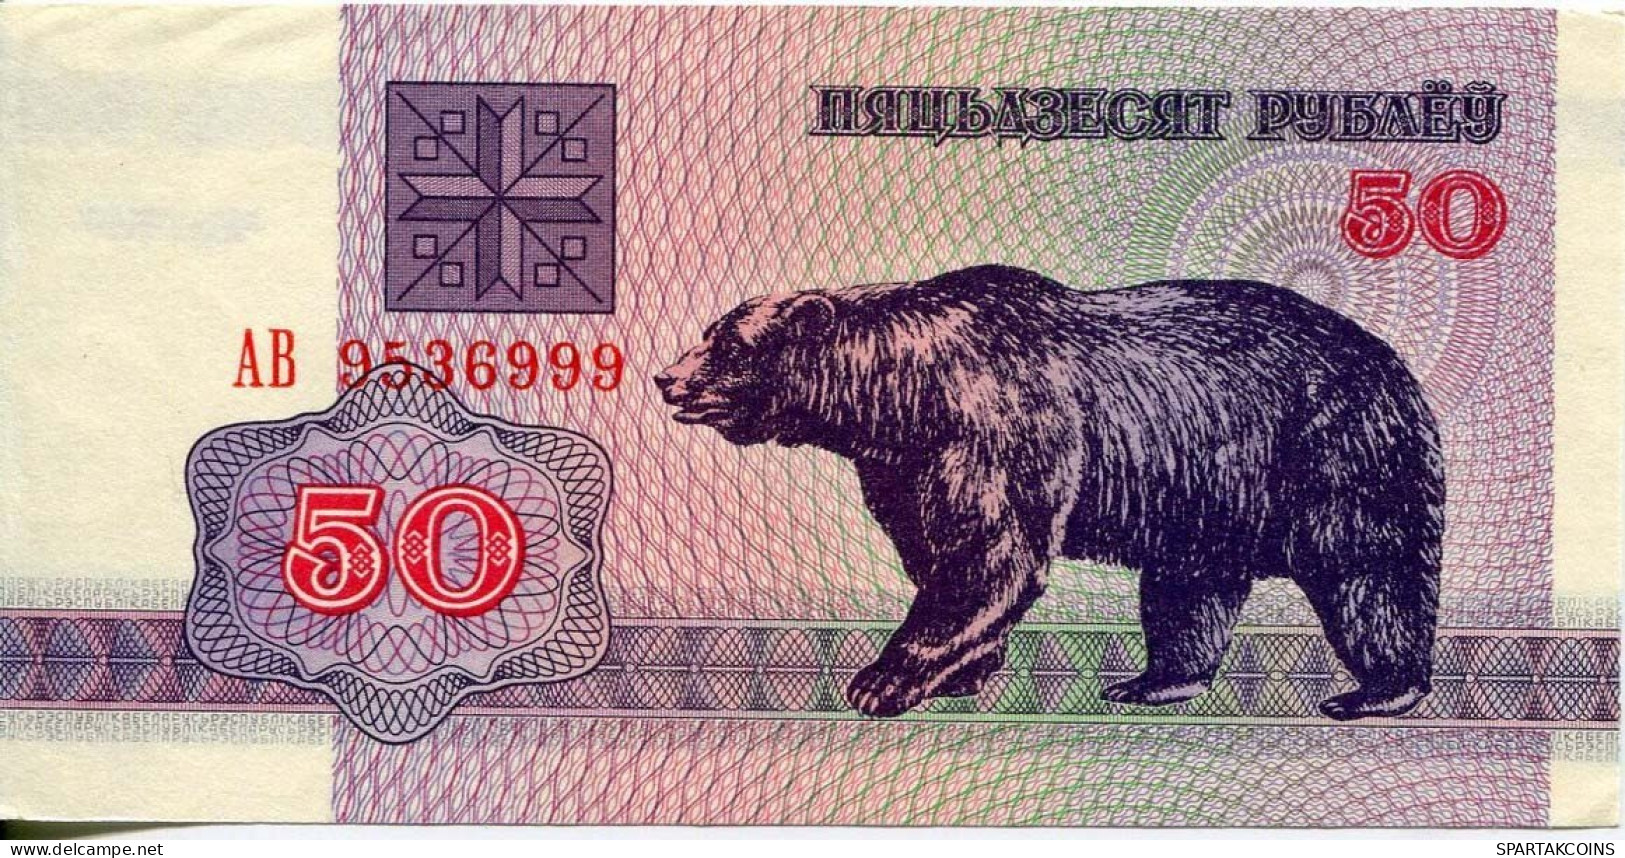 BELARUS 50 RUBLES 1992 Bear Paper Money Banknote #P10195.V - [11] Emisiones Locales